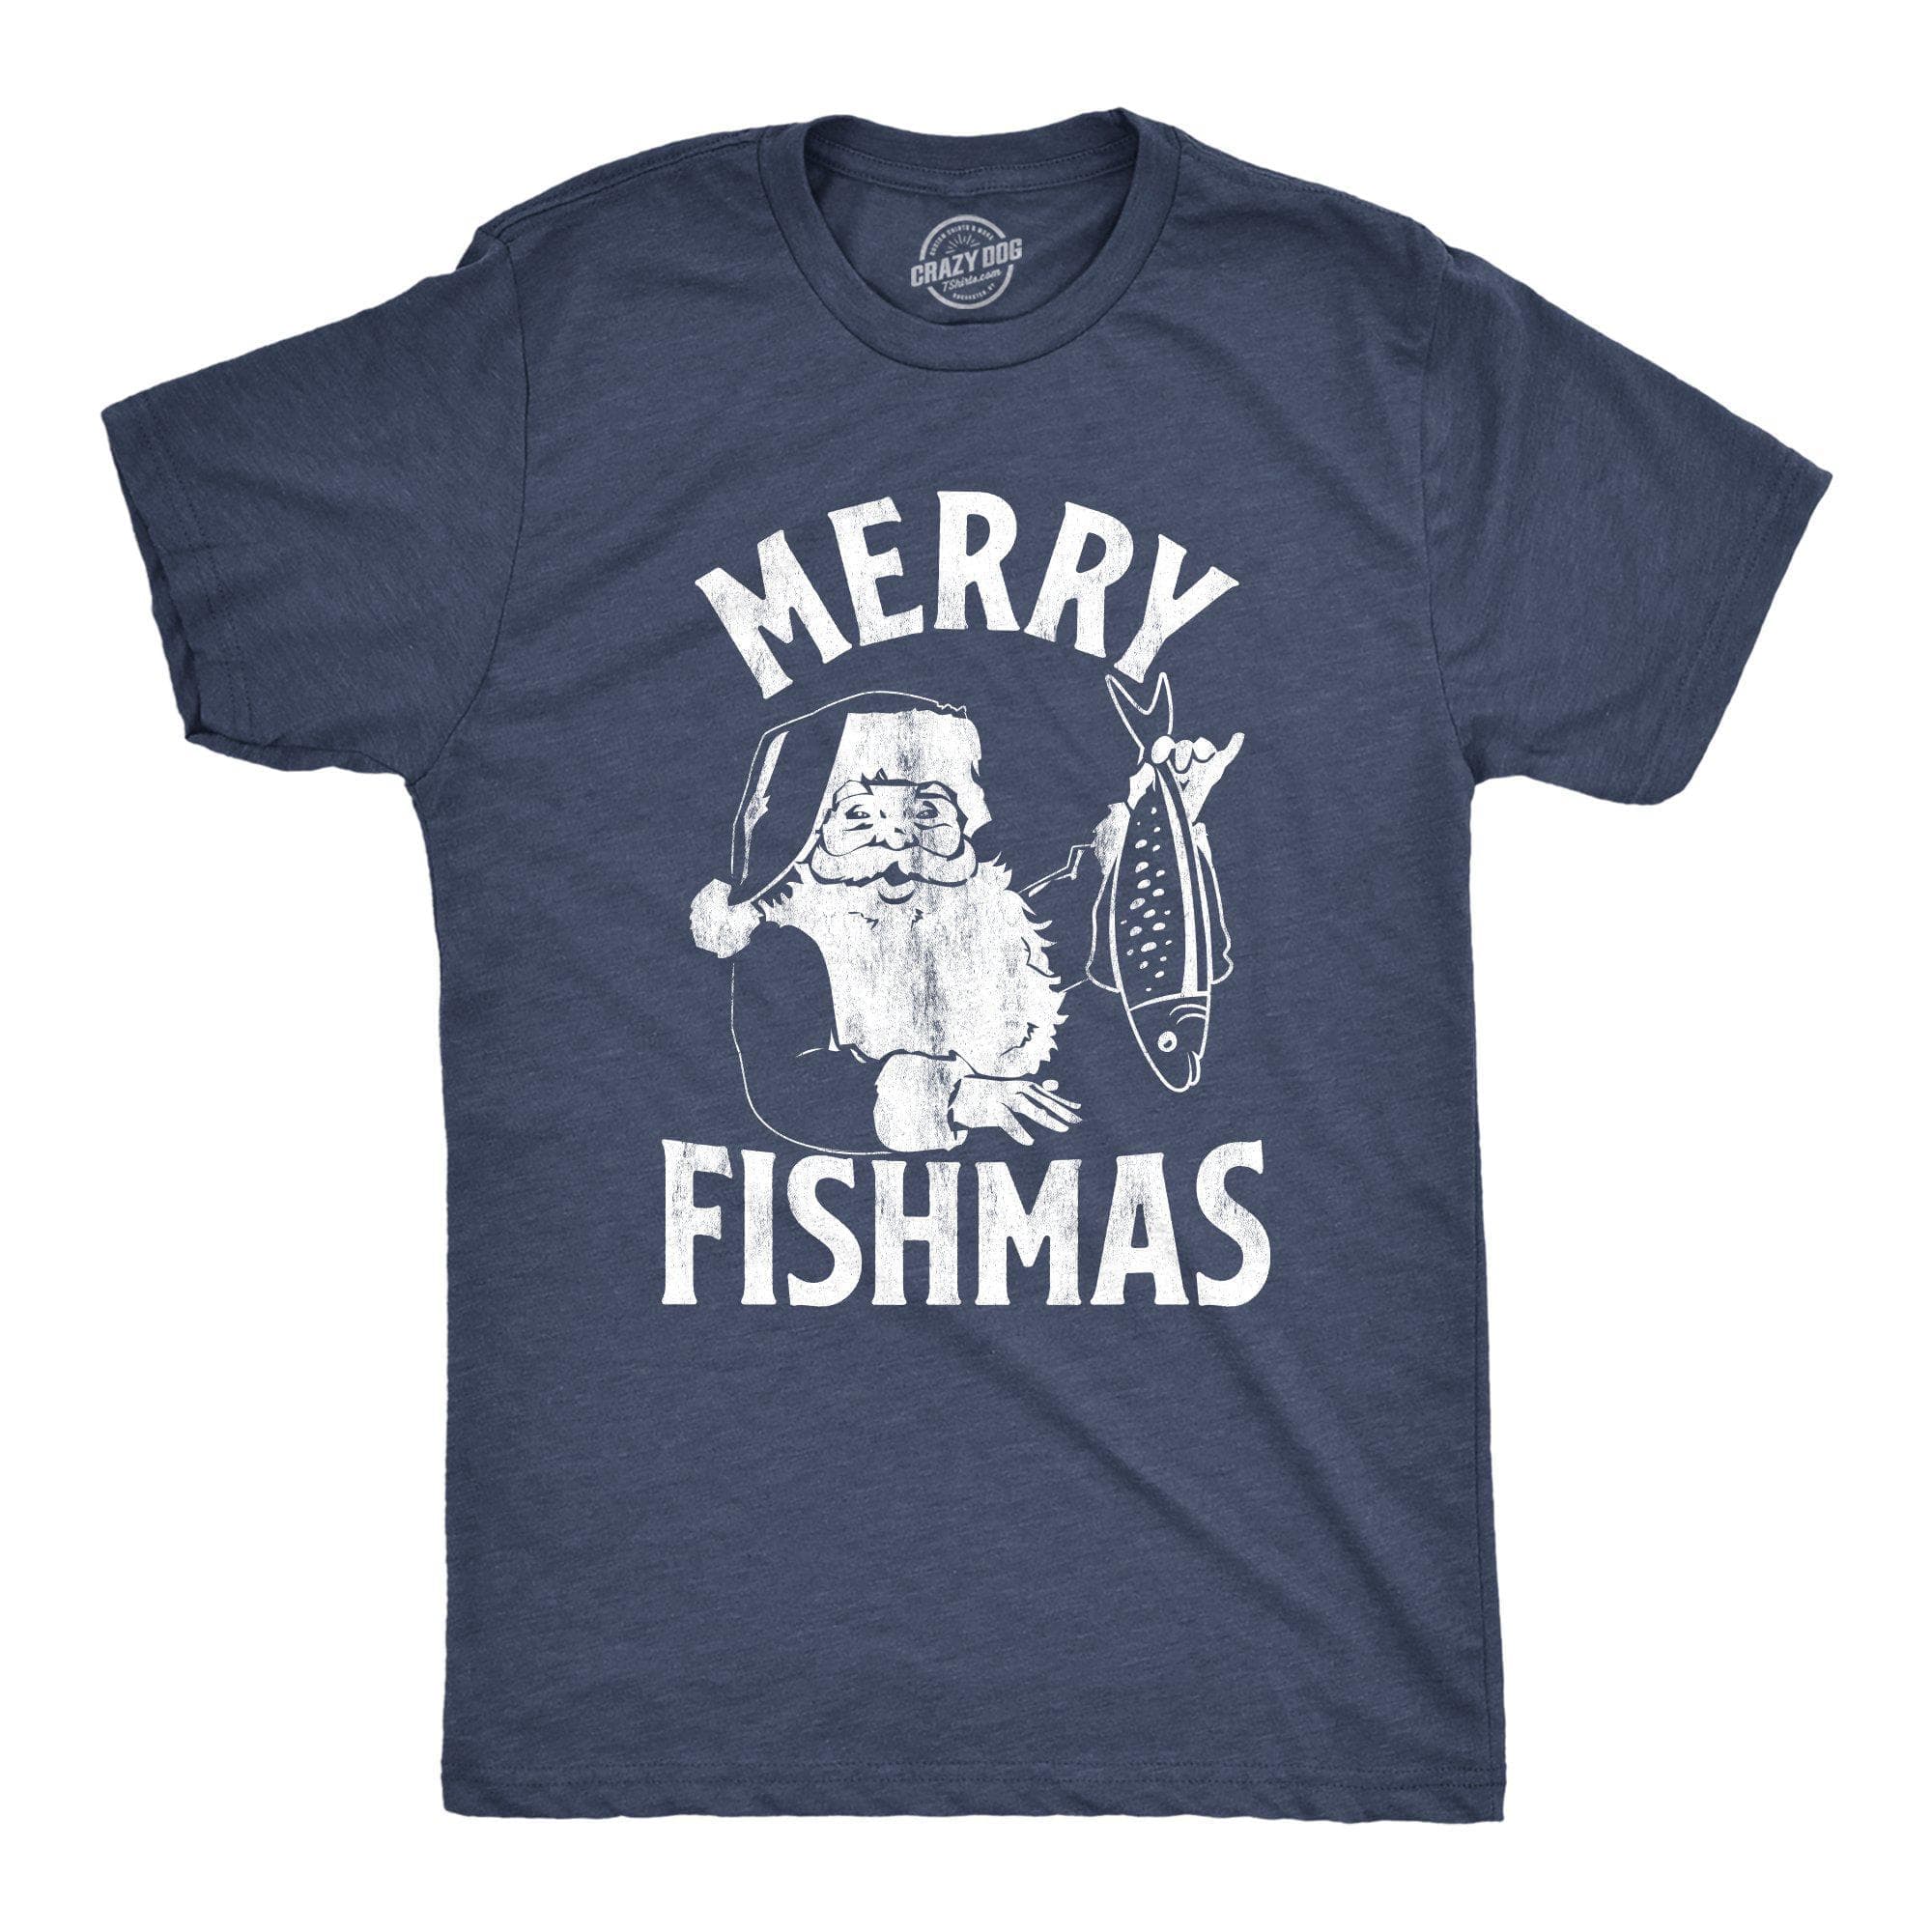 Fish and Fame Original Mens Fishing Graphic T-Shirt Large brown Short  Sleeve USA